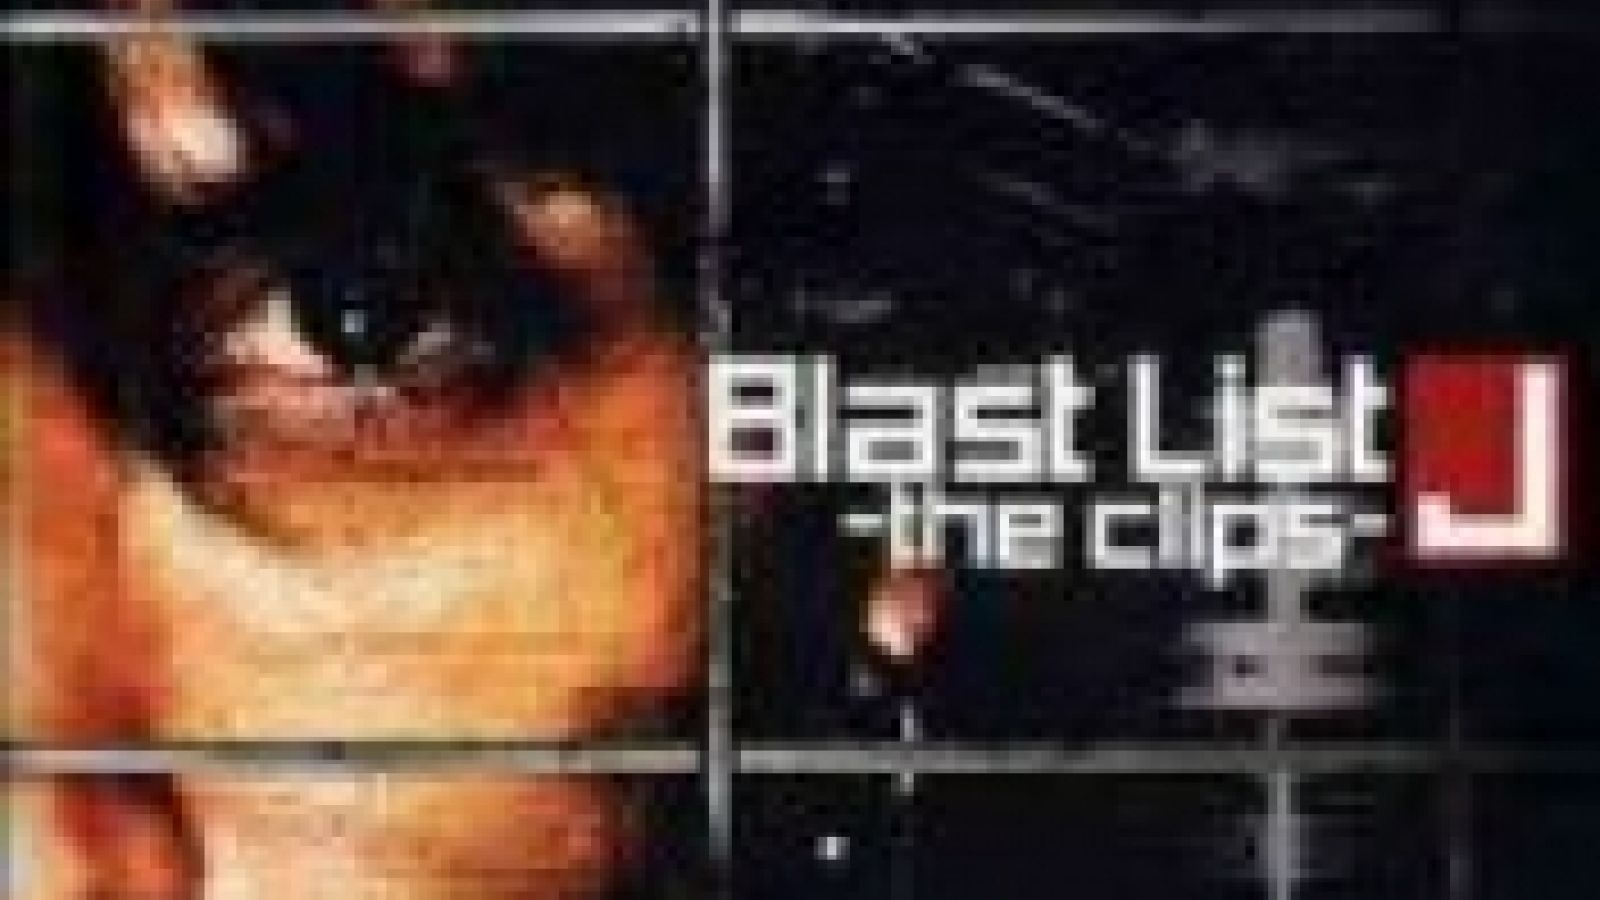 J - Blast list - the clips © 